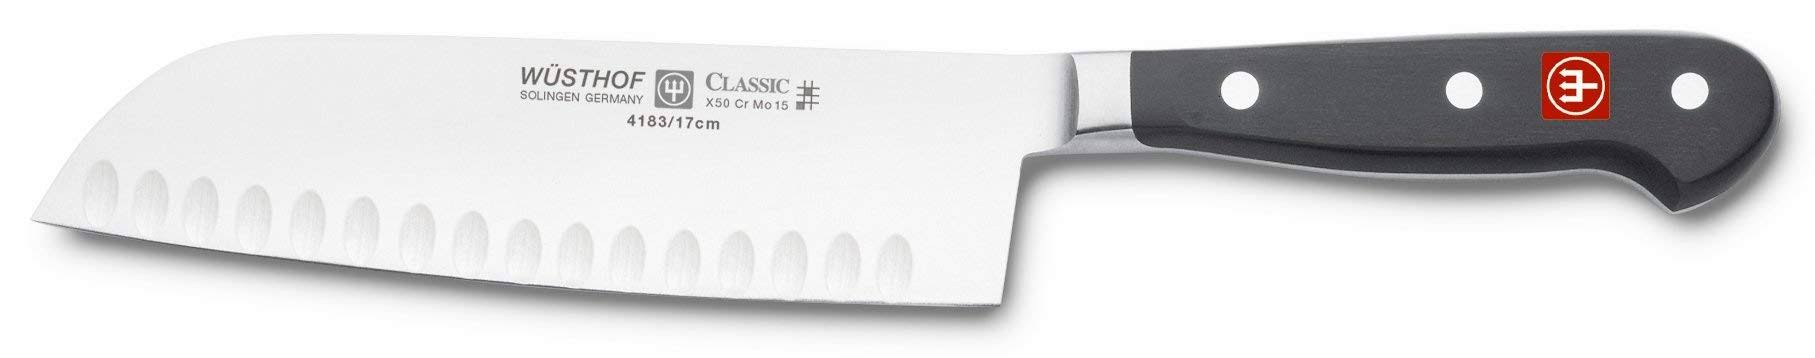 Wusthof Trident Classic Santuko Knife - 7"